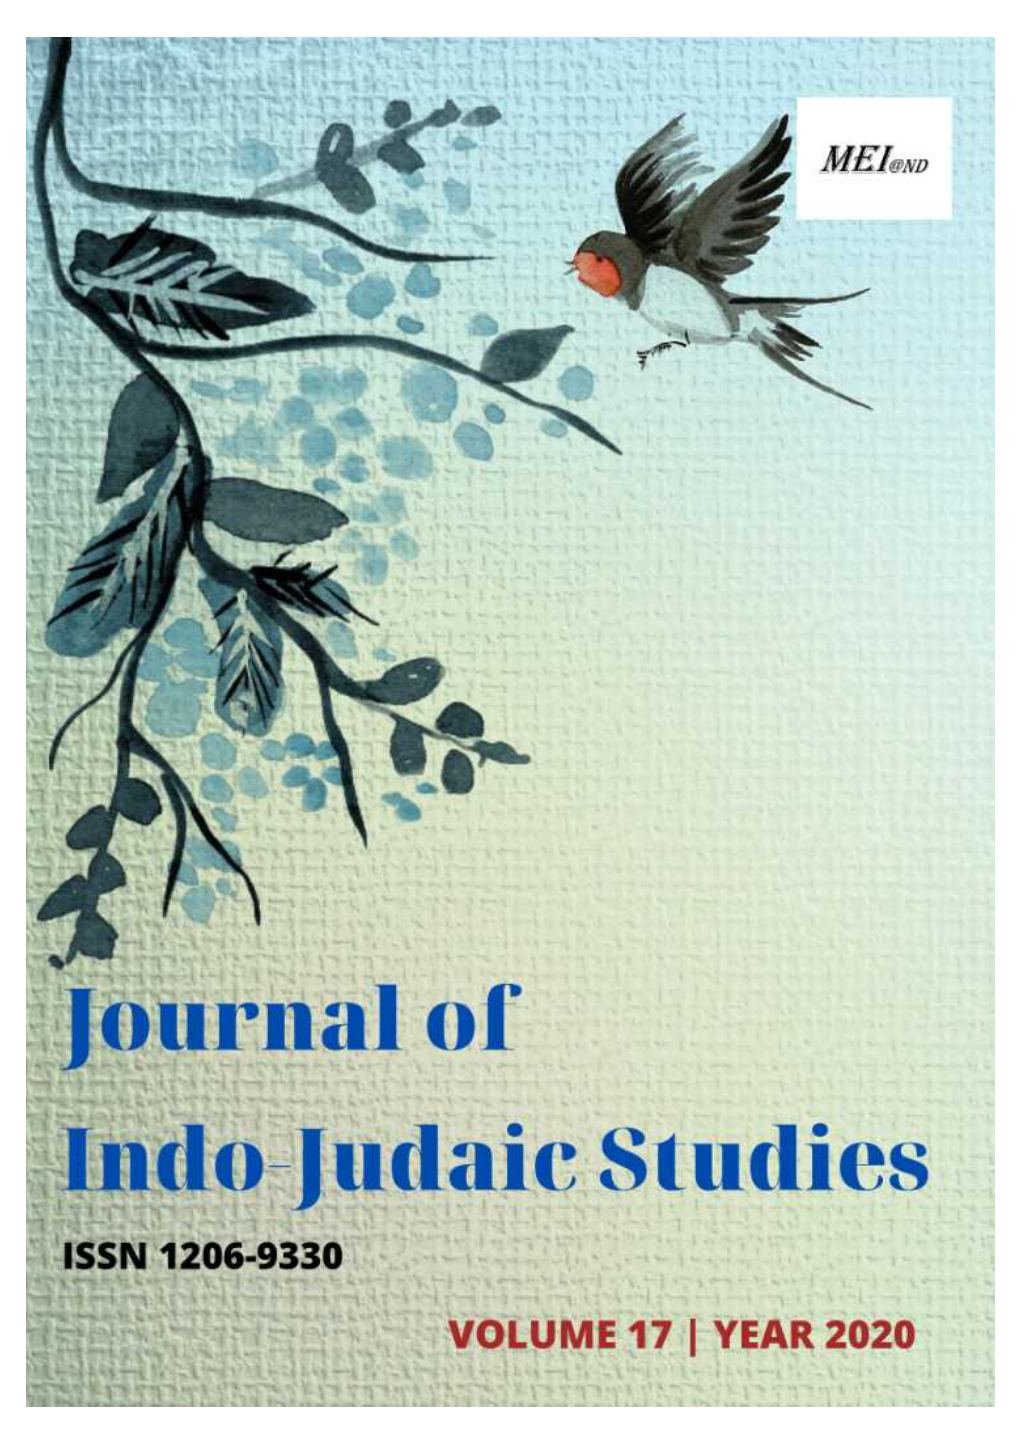 THE JOURNAL of INDO-JUDAIC STUDIES ______Number 17 2020